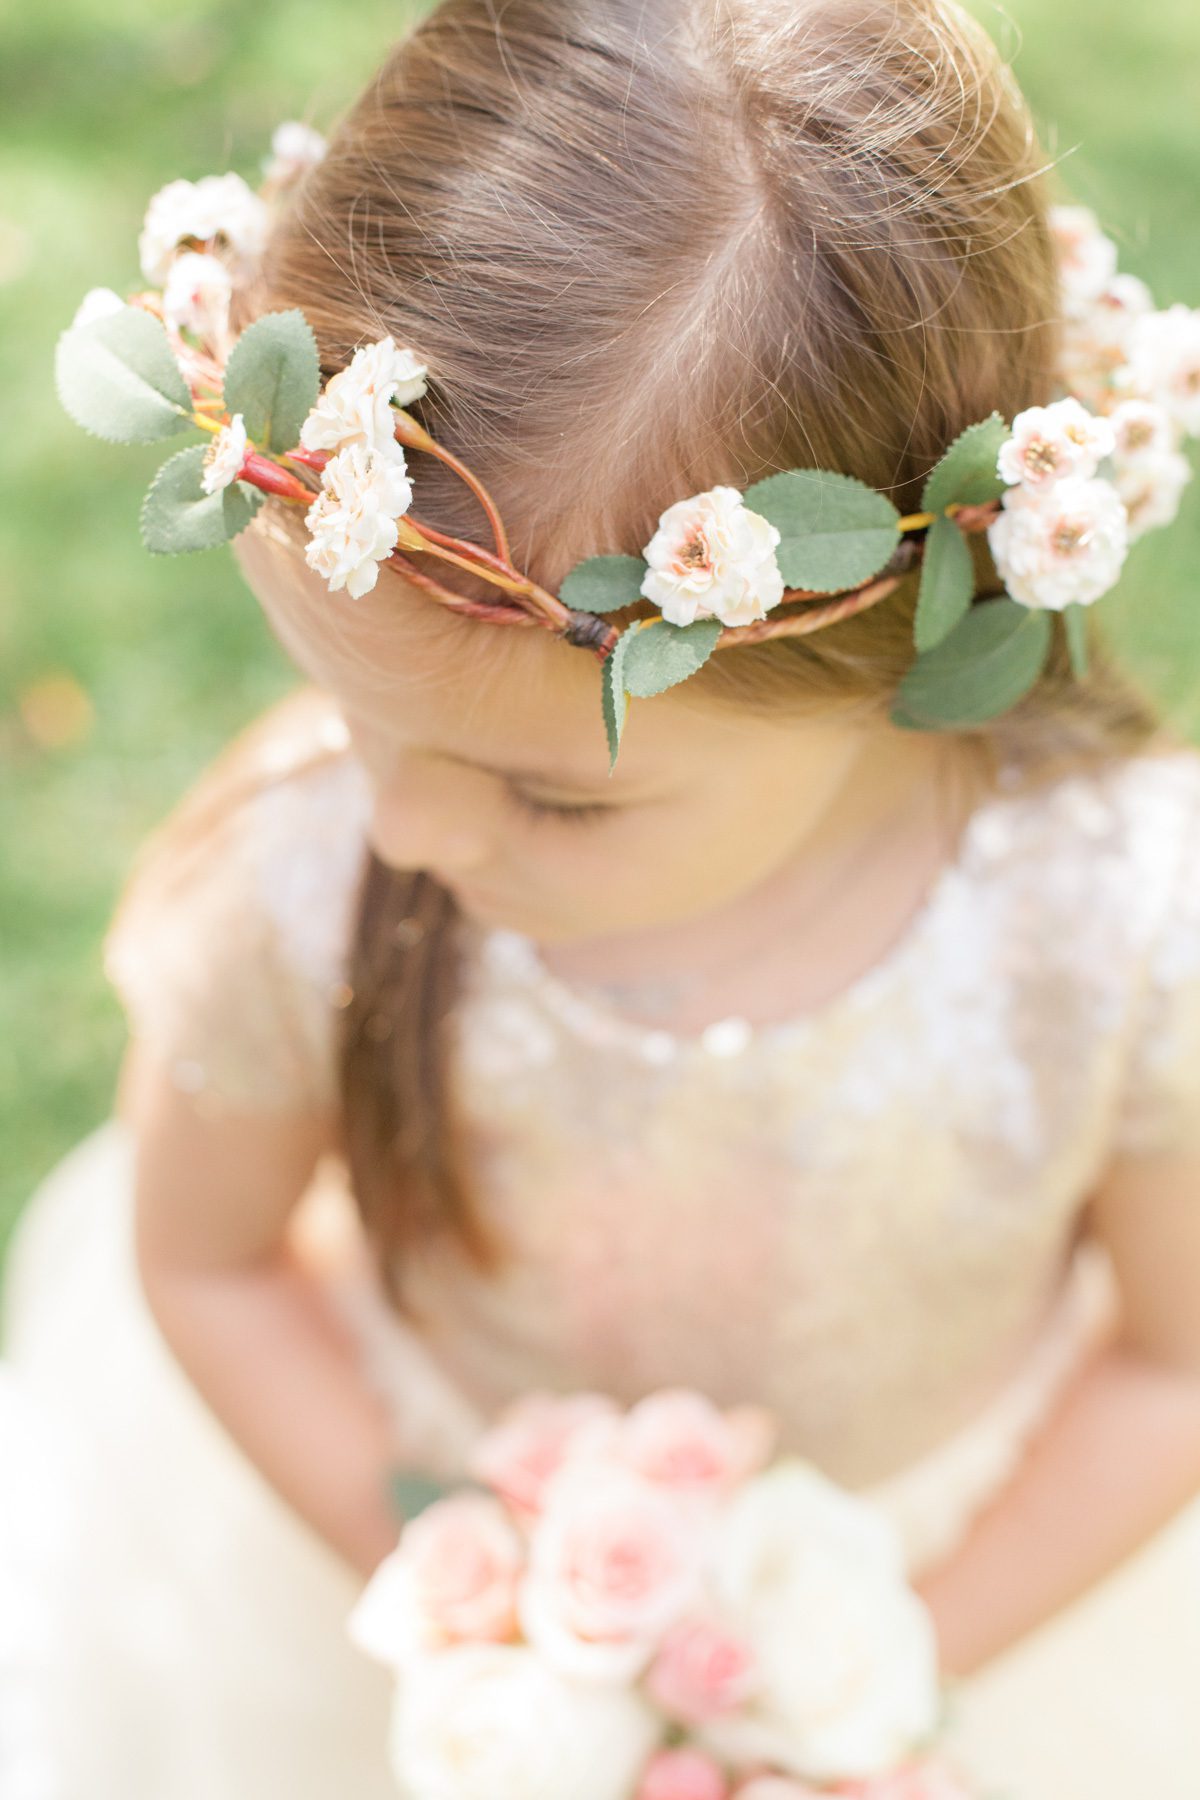 Beautiful flower headpiece on flower girl at Butterfly Hollow wedding in Gordonsville, TN / Photography by Krista Lee